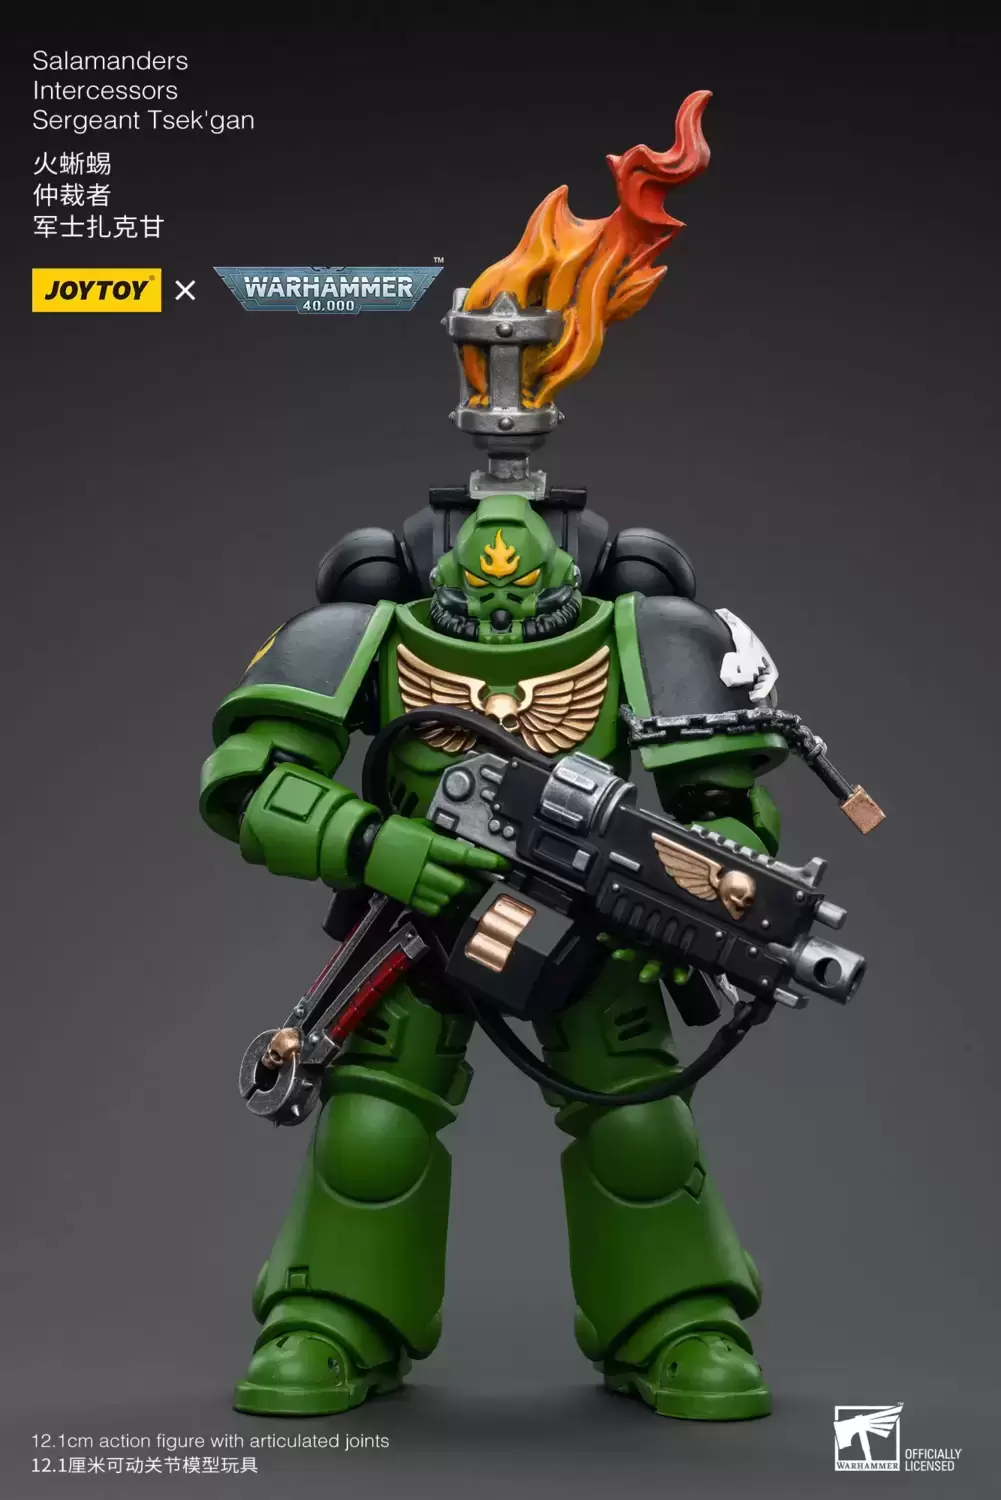 Salamanders Bladeguard Veteran - Warhammer 40K Action Figure By JOYTOY